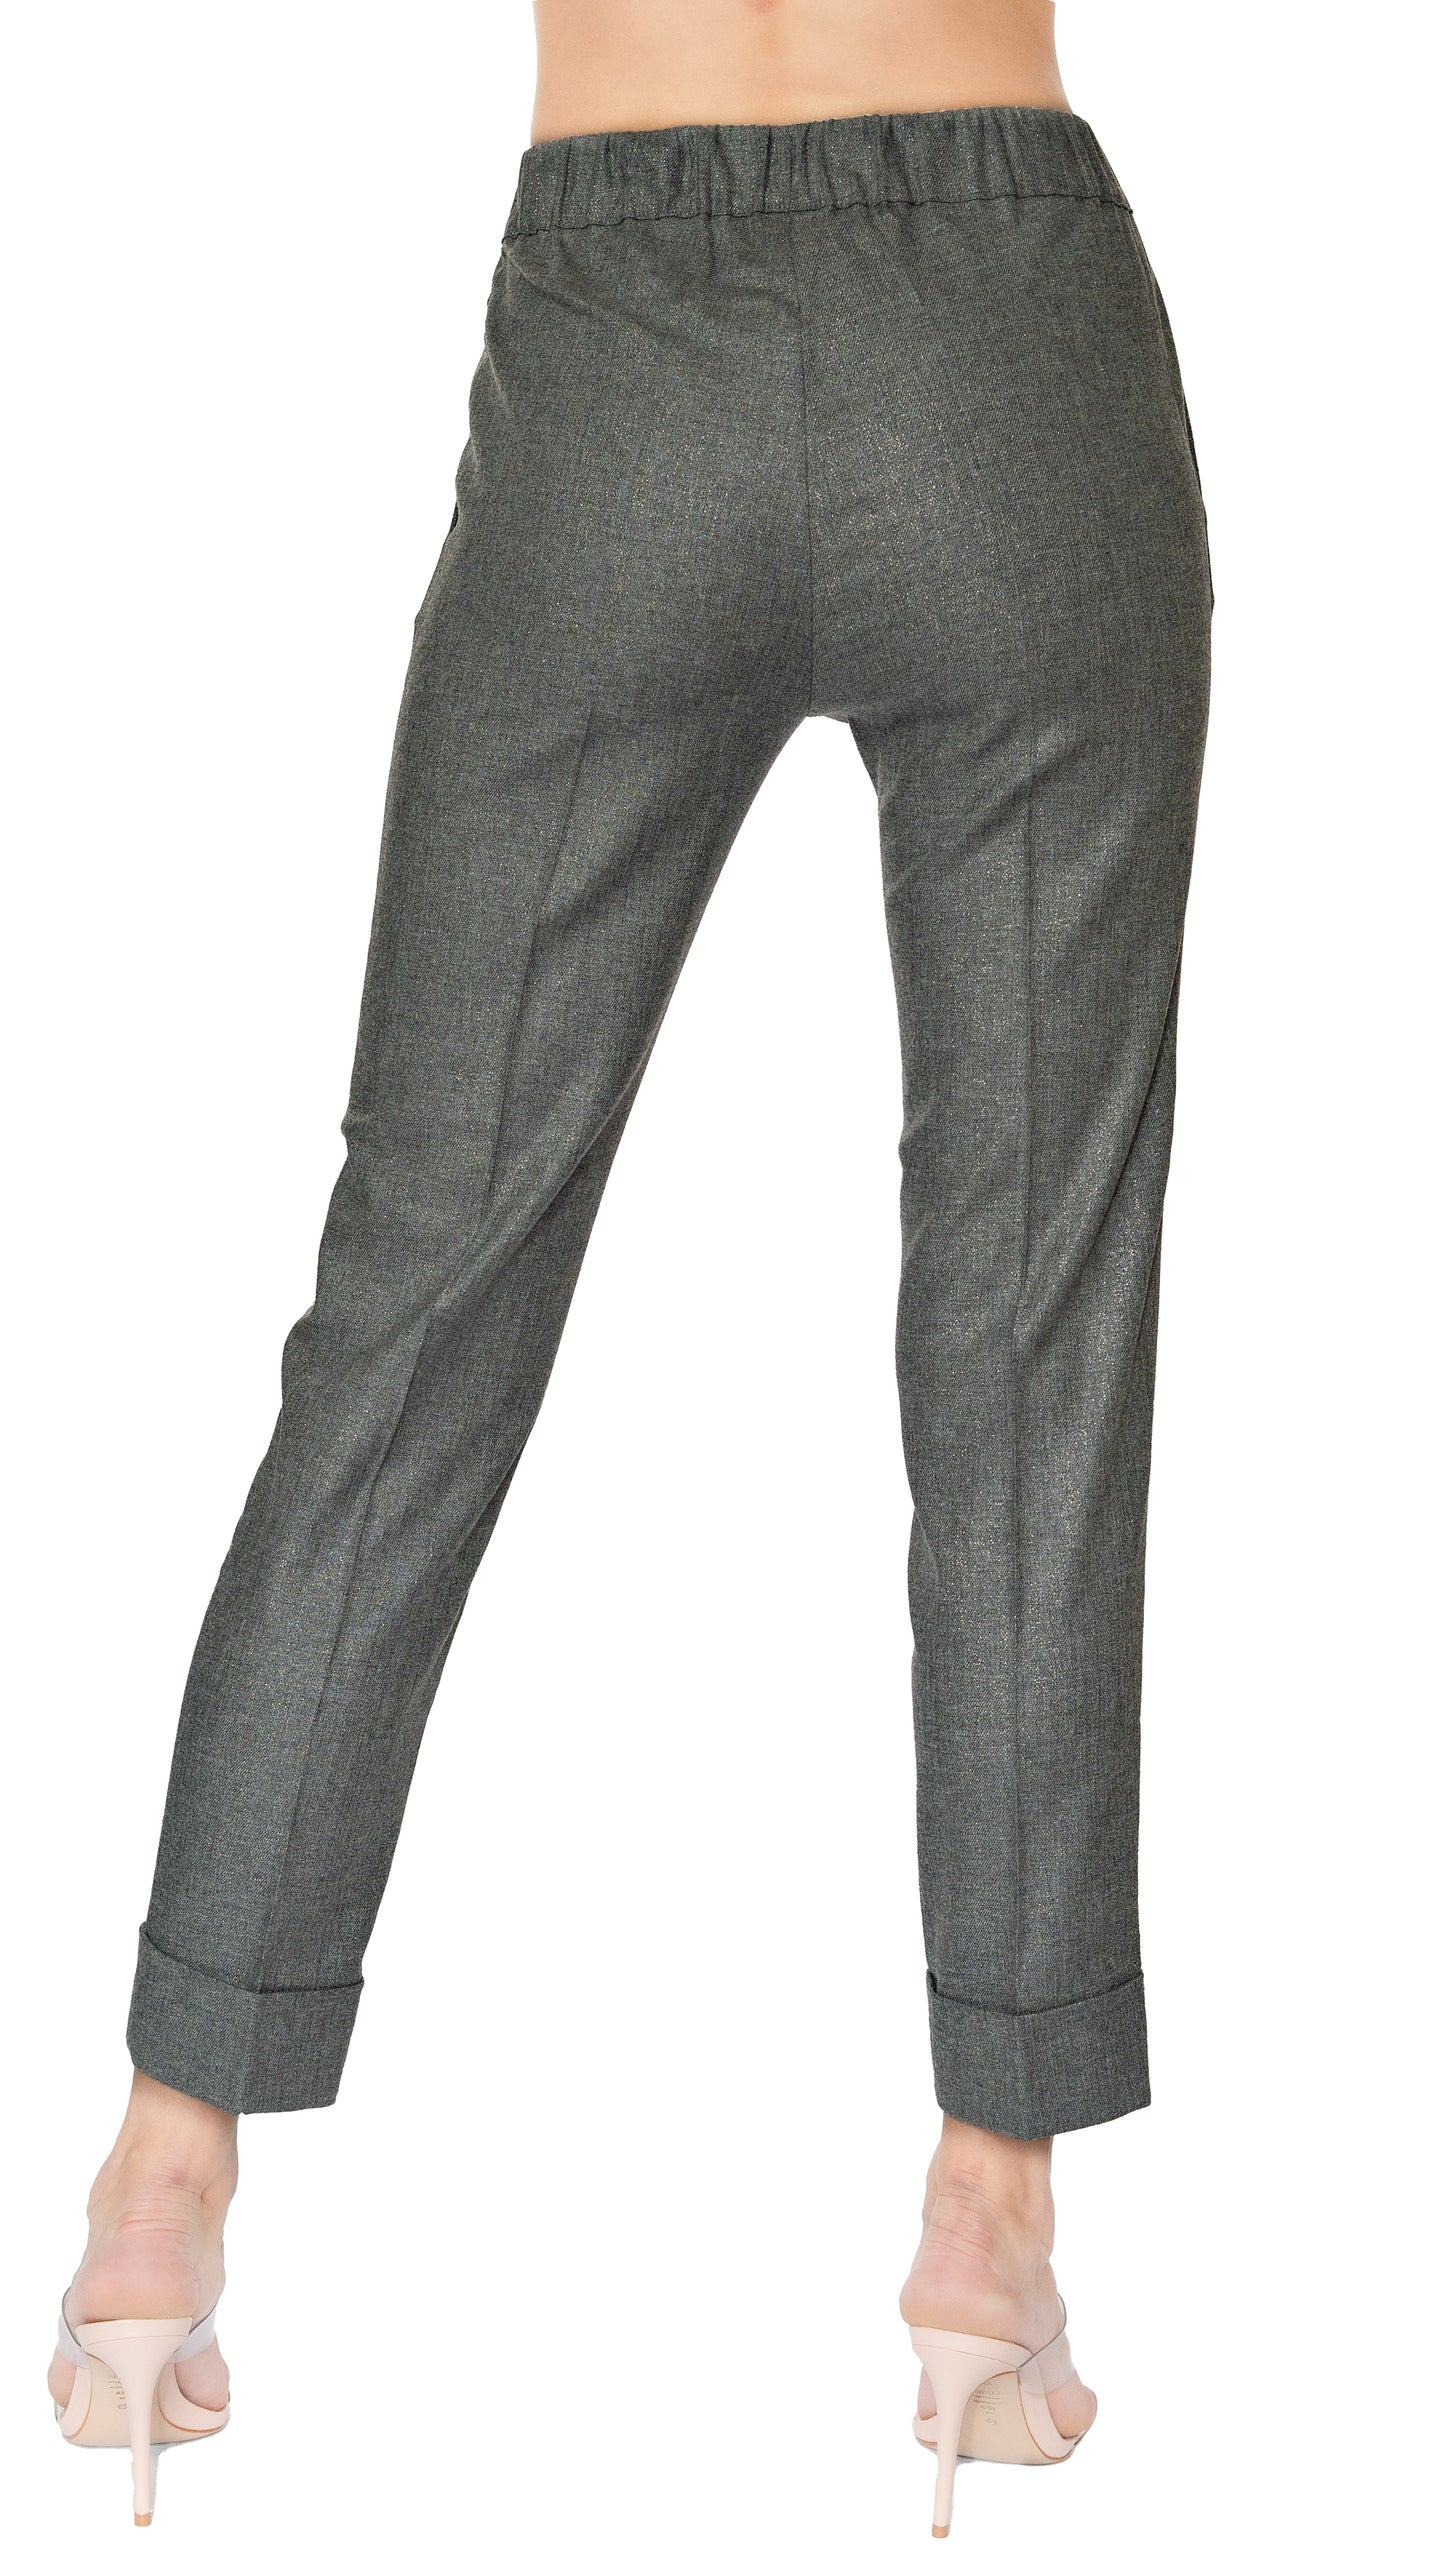 D. Exterior pants in grey